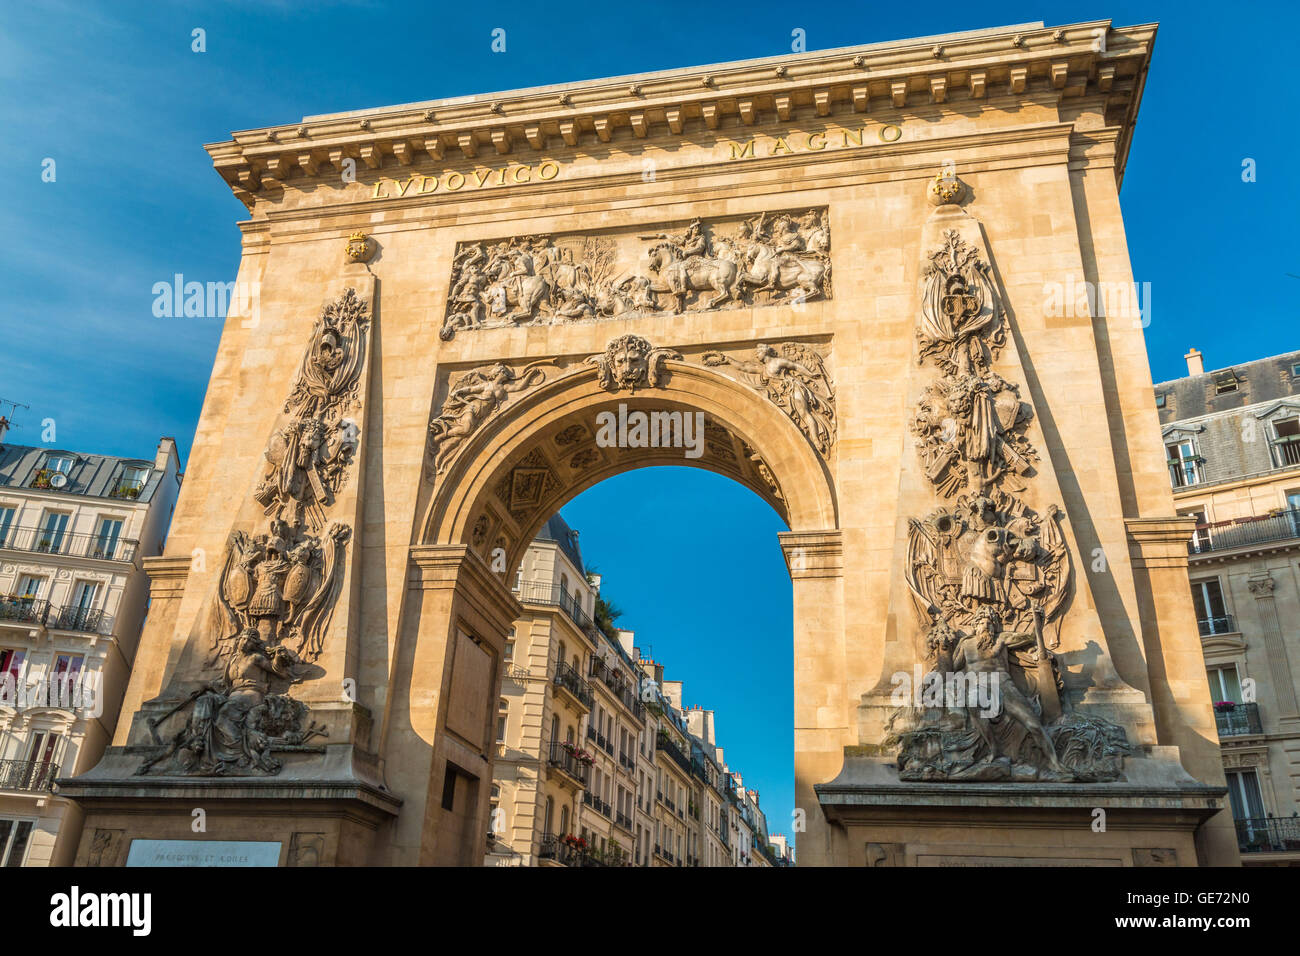 Saint denis paris hi-res stock photography and images - Alamy